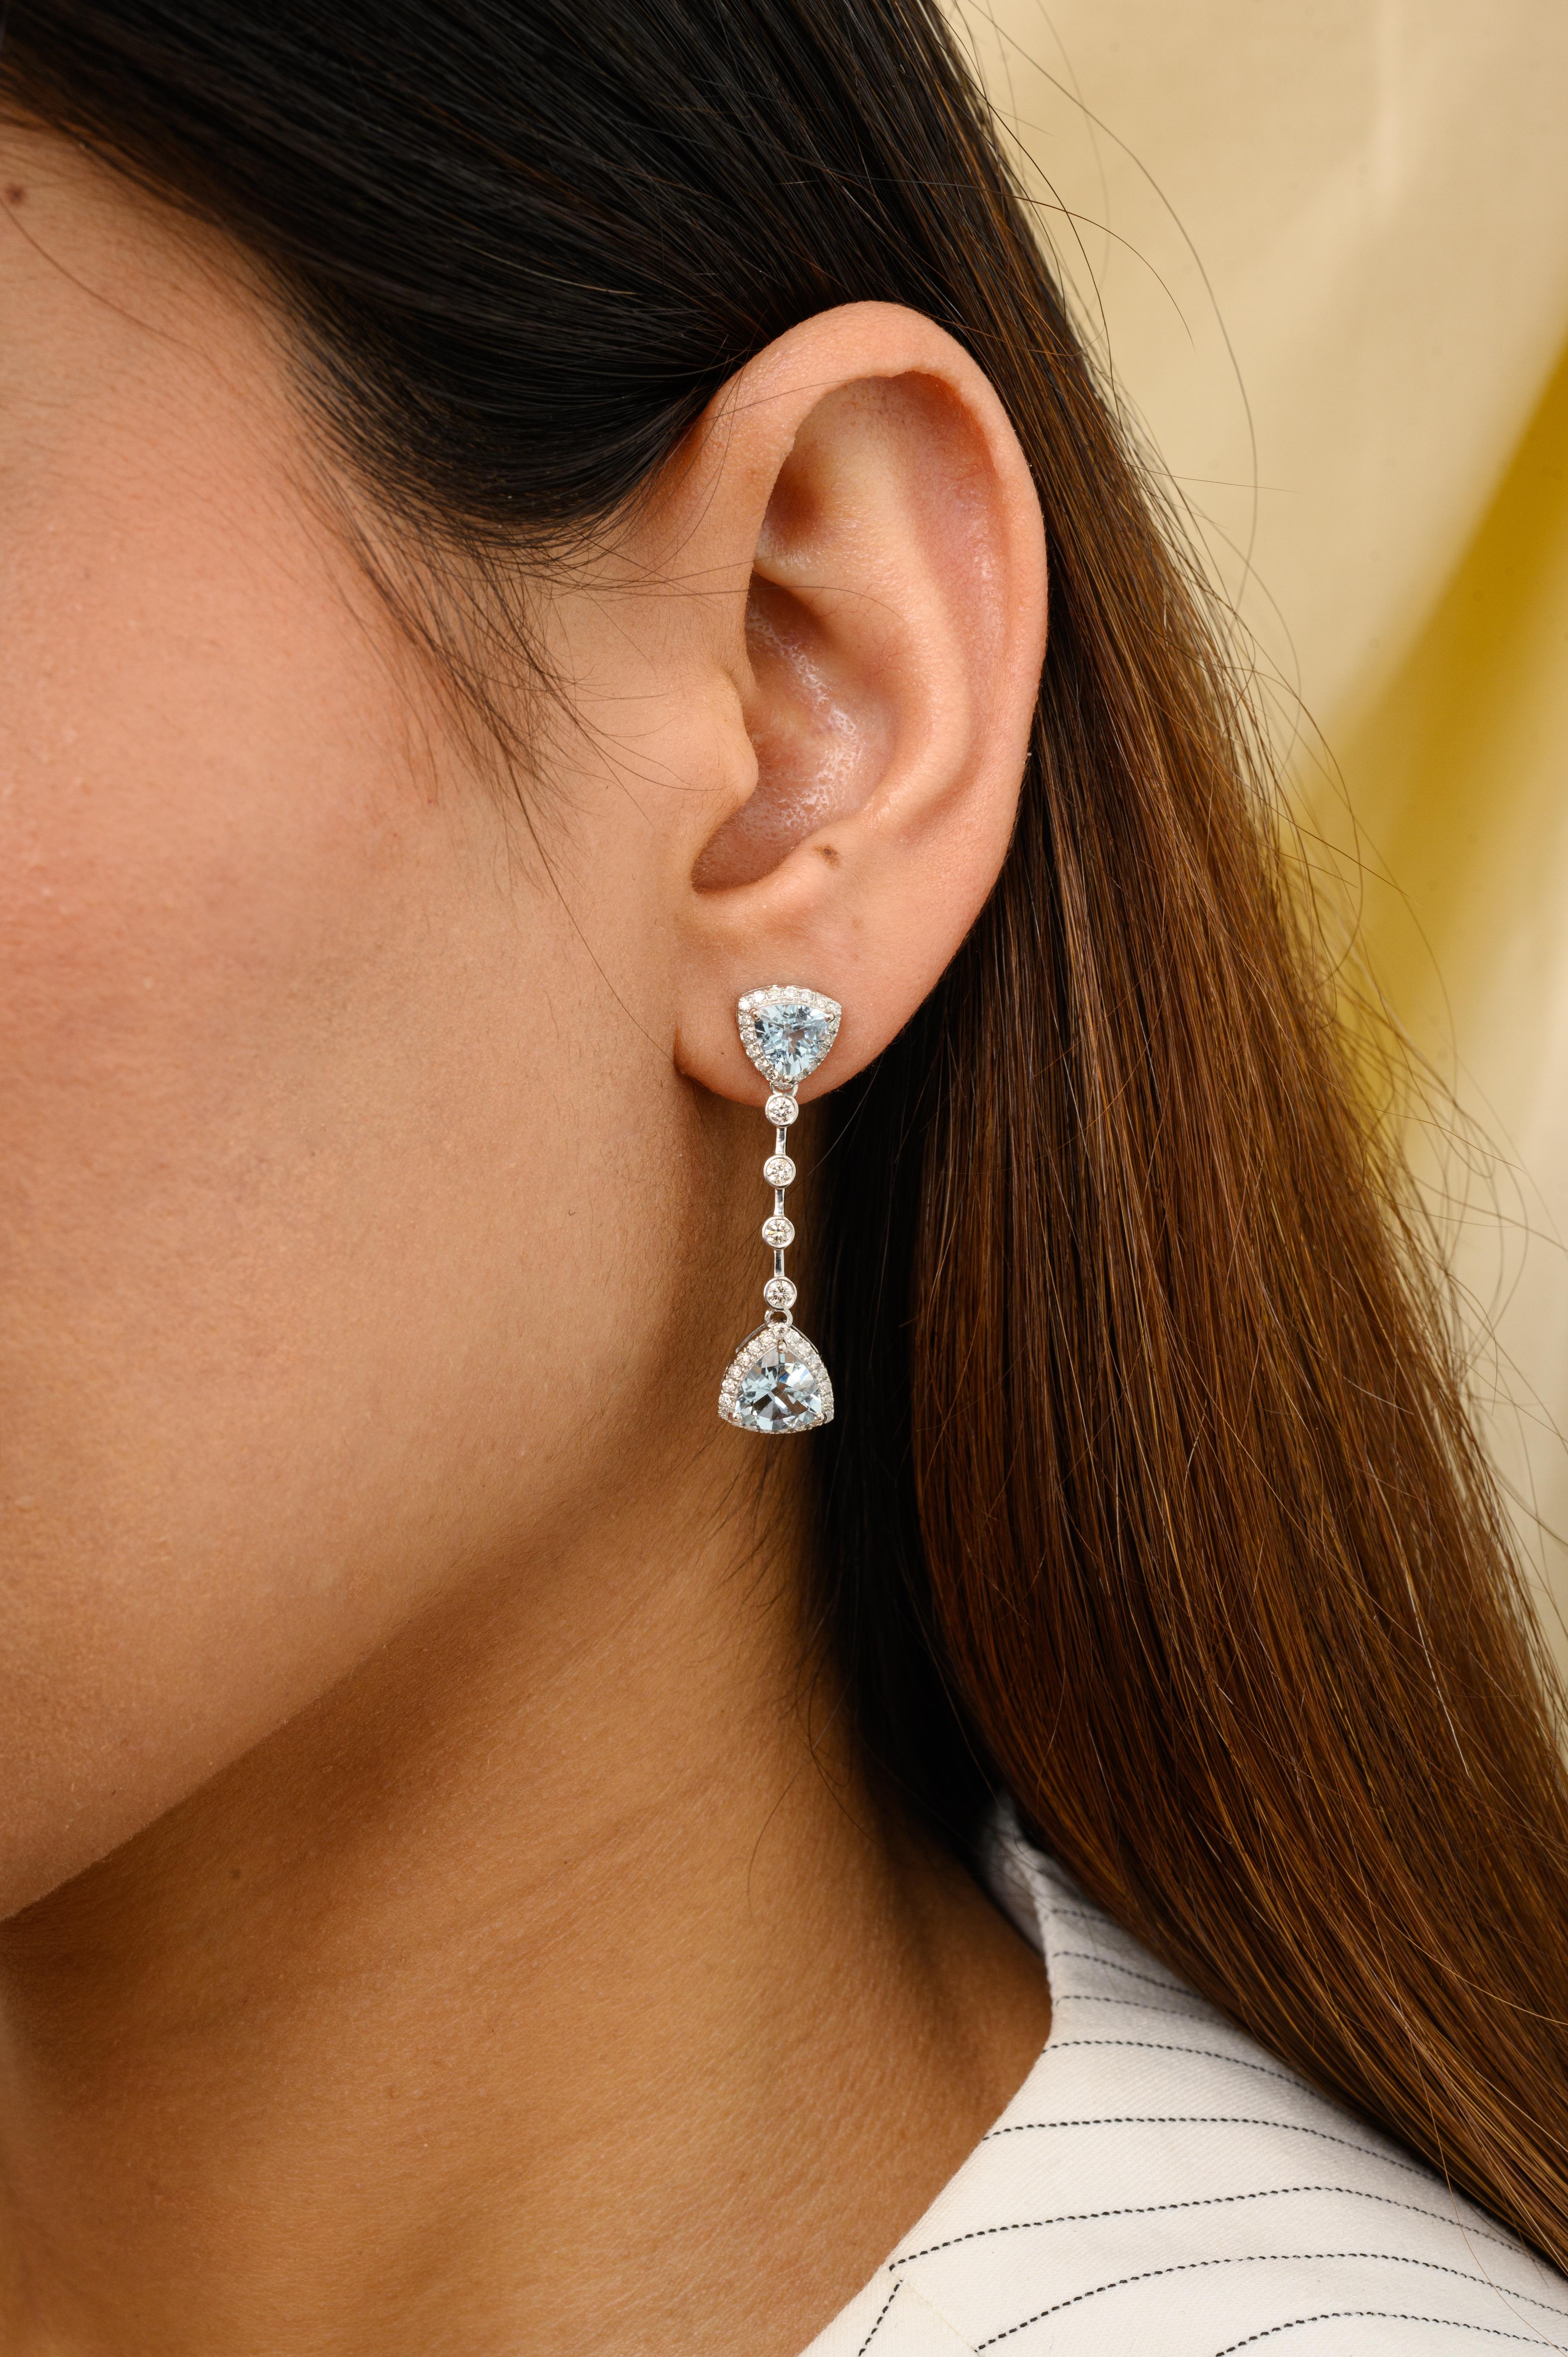 Trillion Cut Designer 3.26 CTW Trillion Aquamarine Diamond Drop Earrings in 18k White Gold For Sale